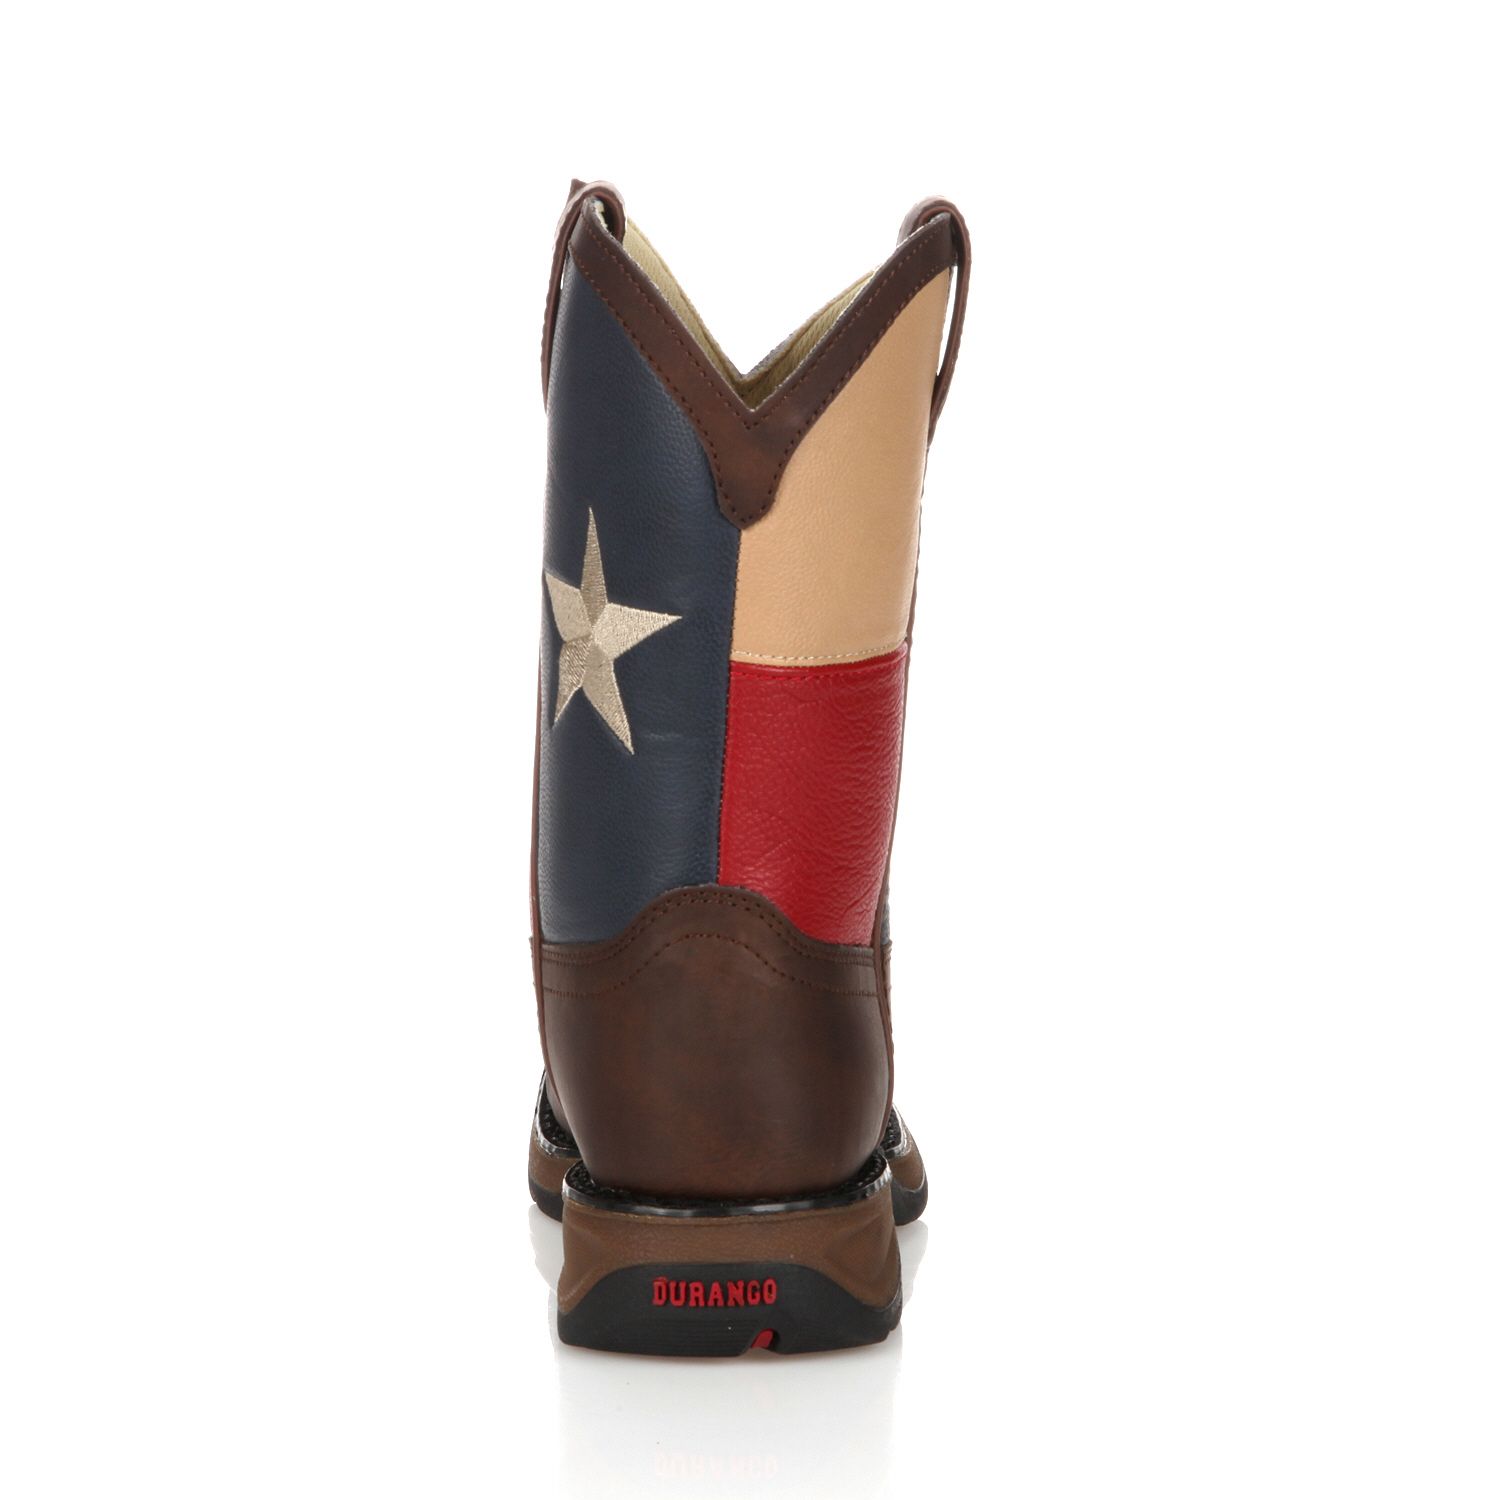 Детские ботинки в стиле вестерн с флагом Техаса Lil Durango Durango